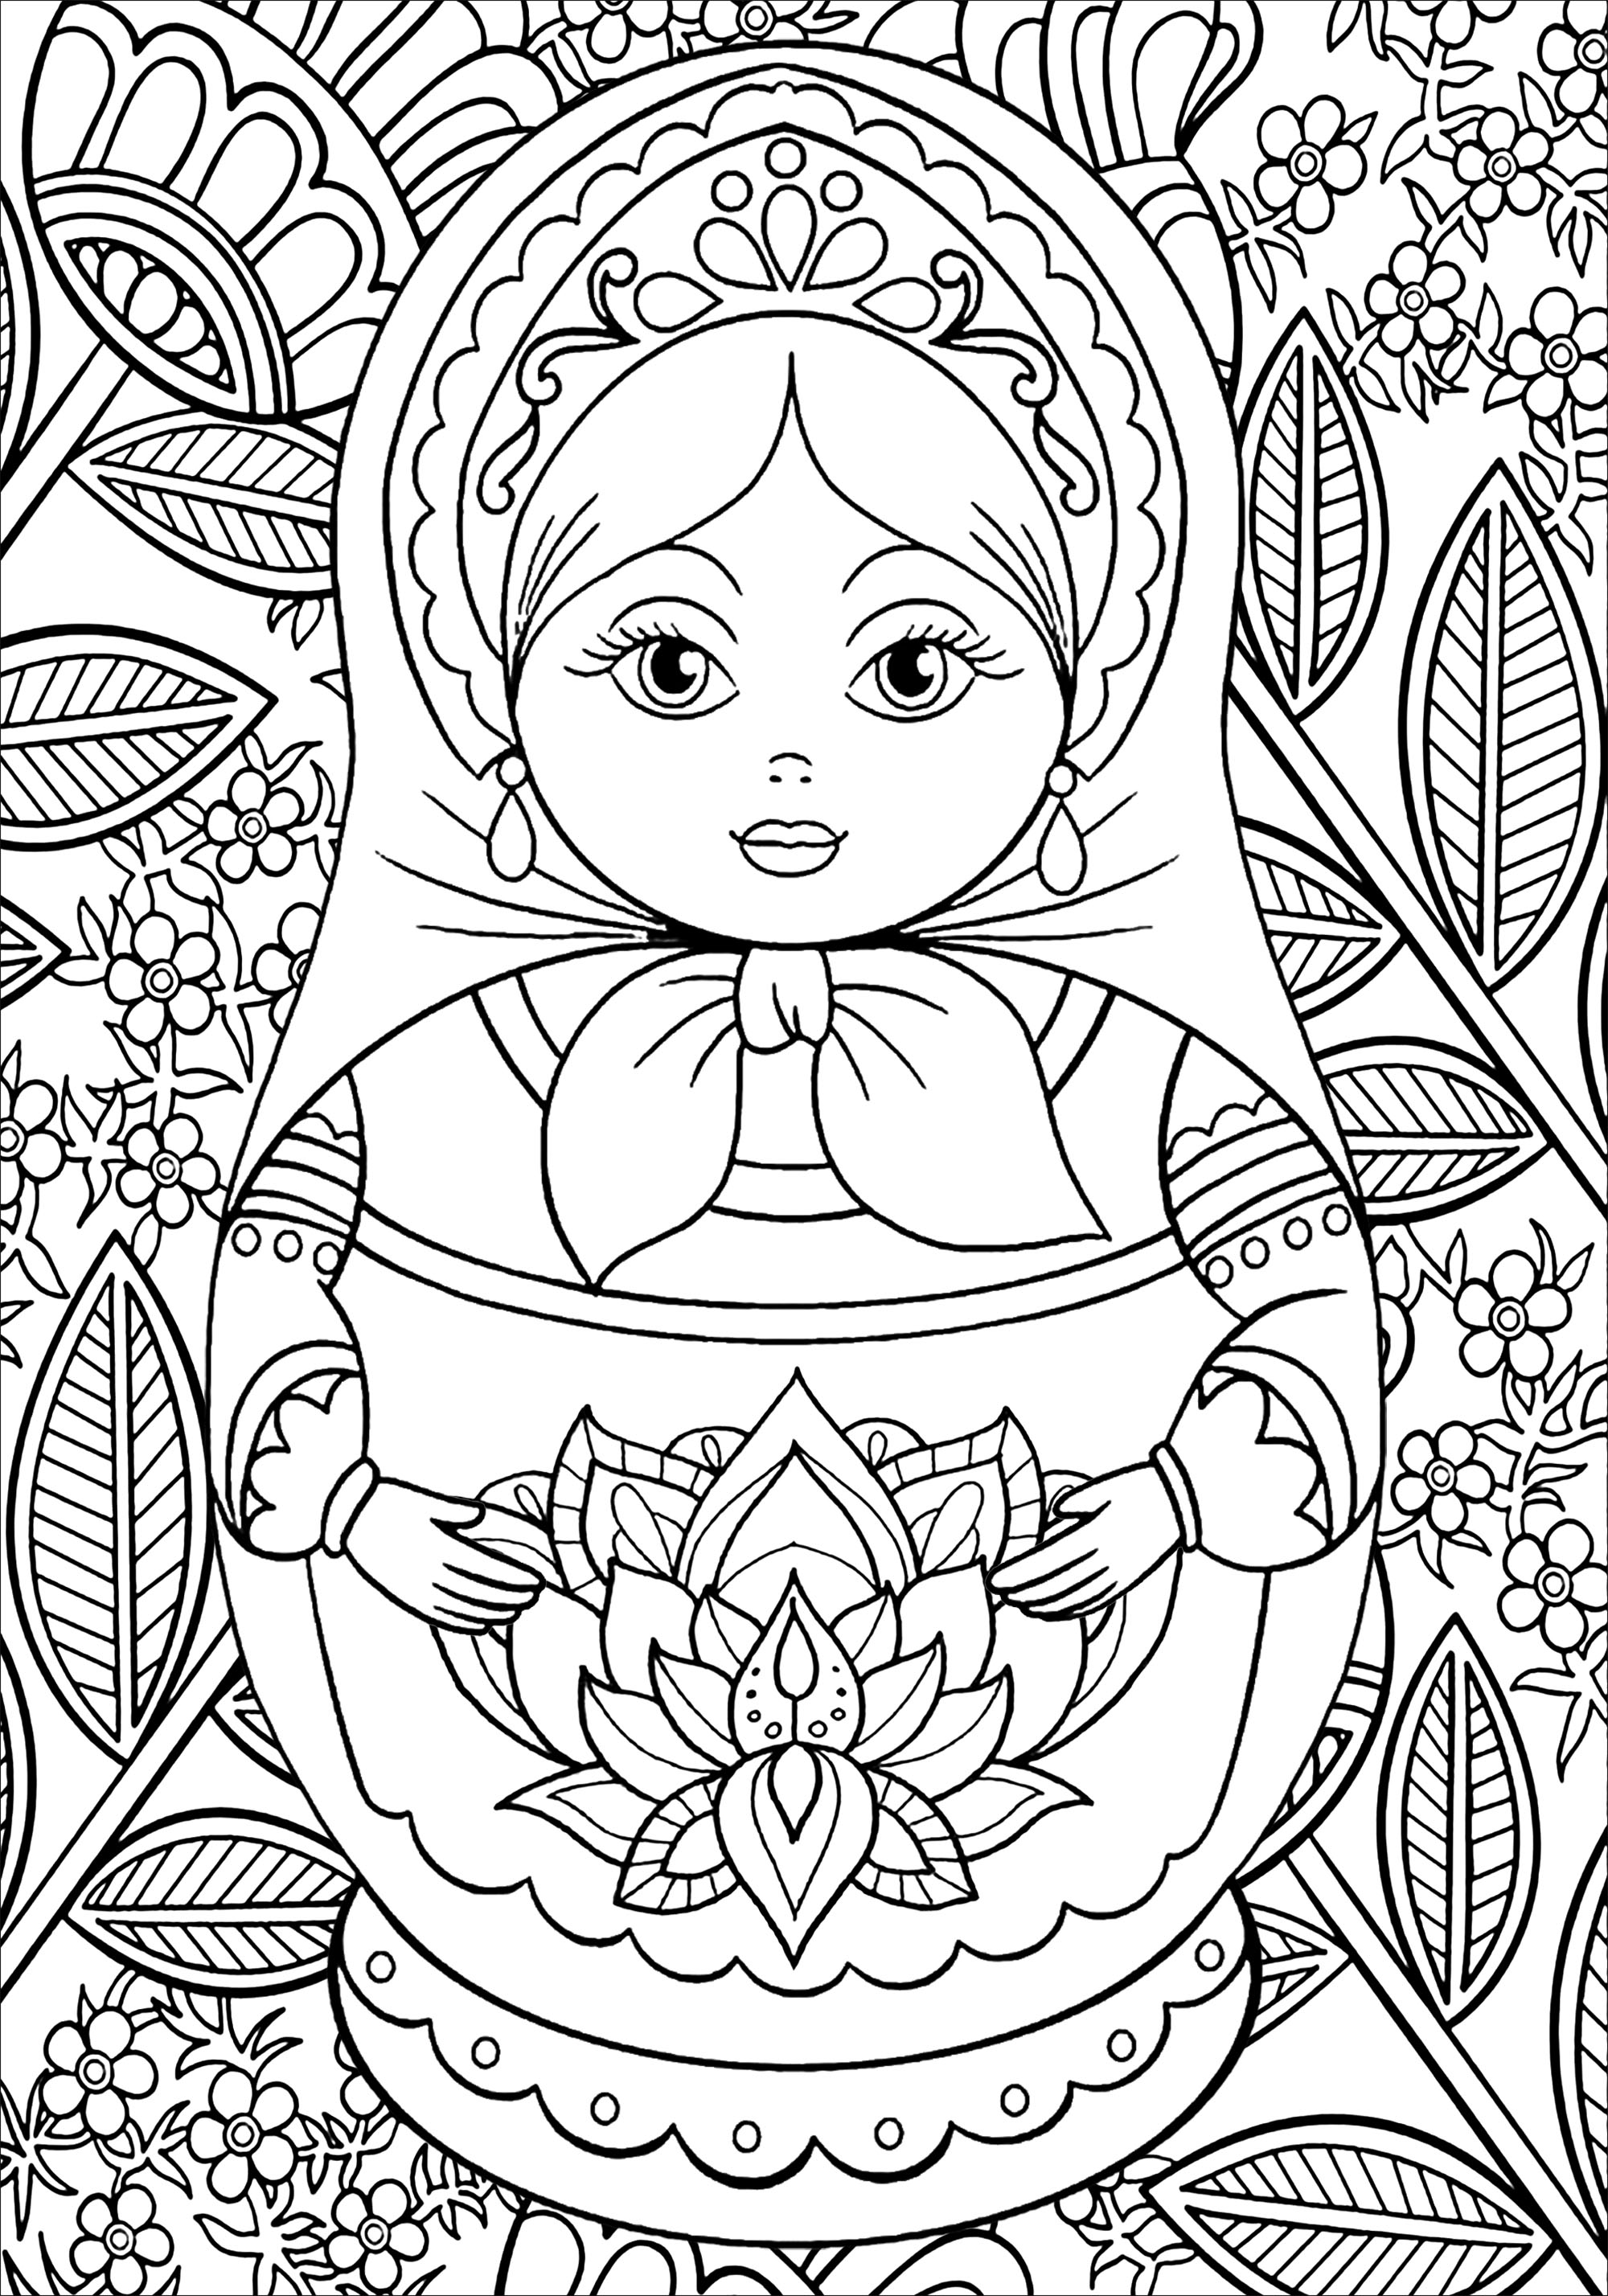 Bambola russa davanti a uno sfondo fiorito e frondoso, Artista : Alexis